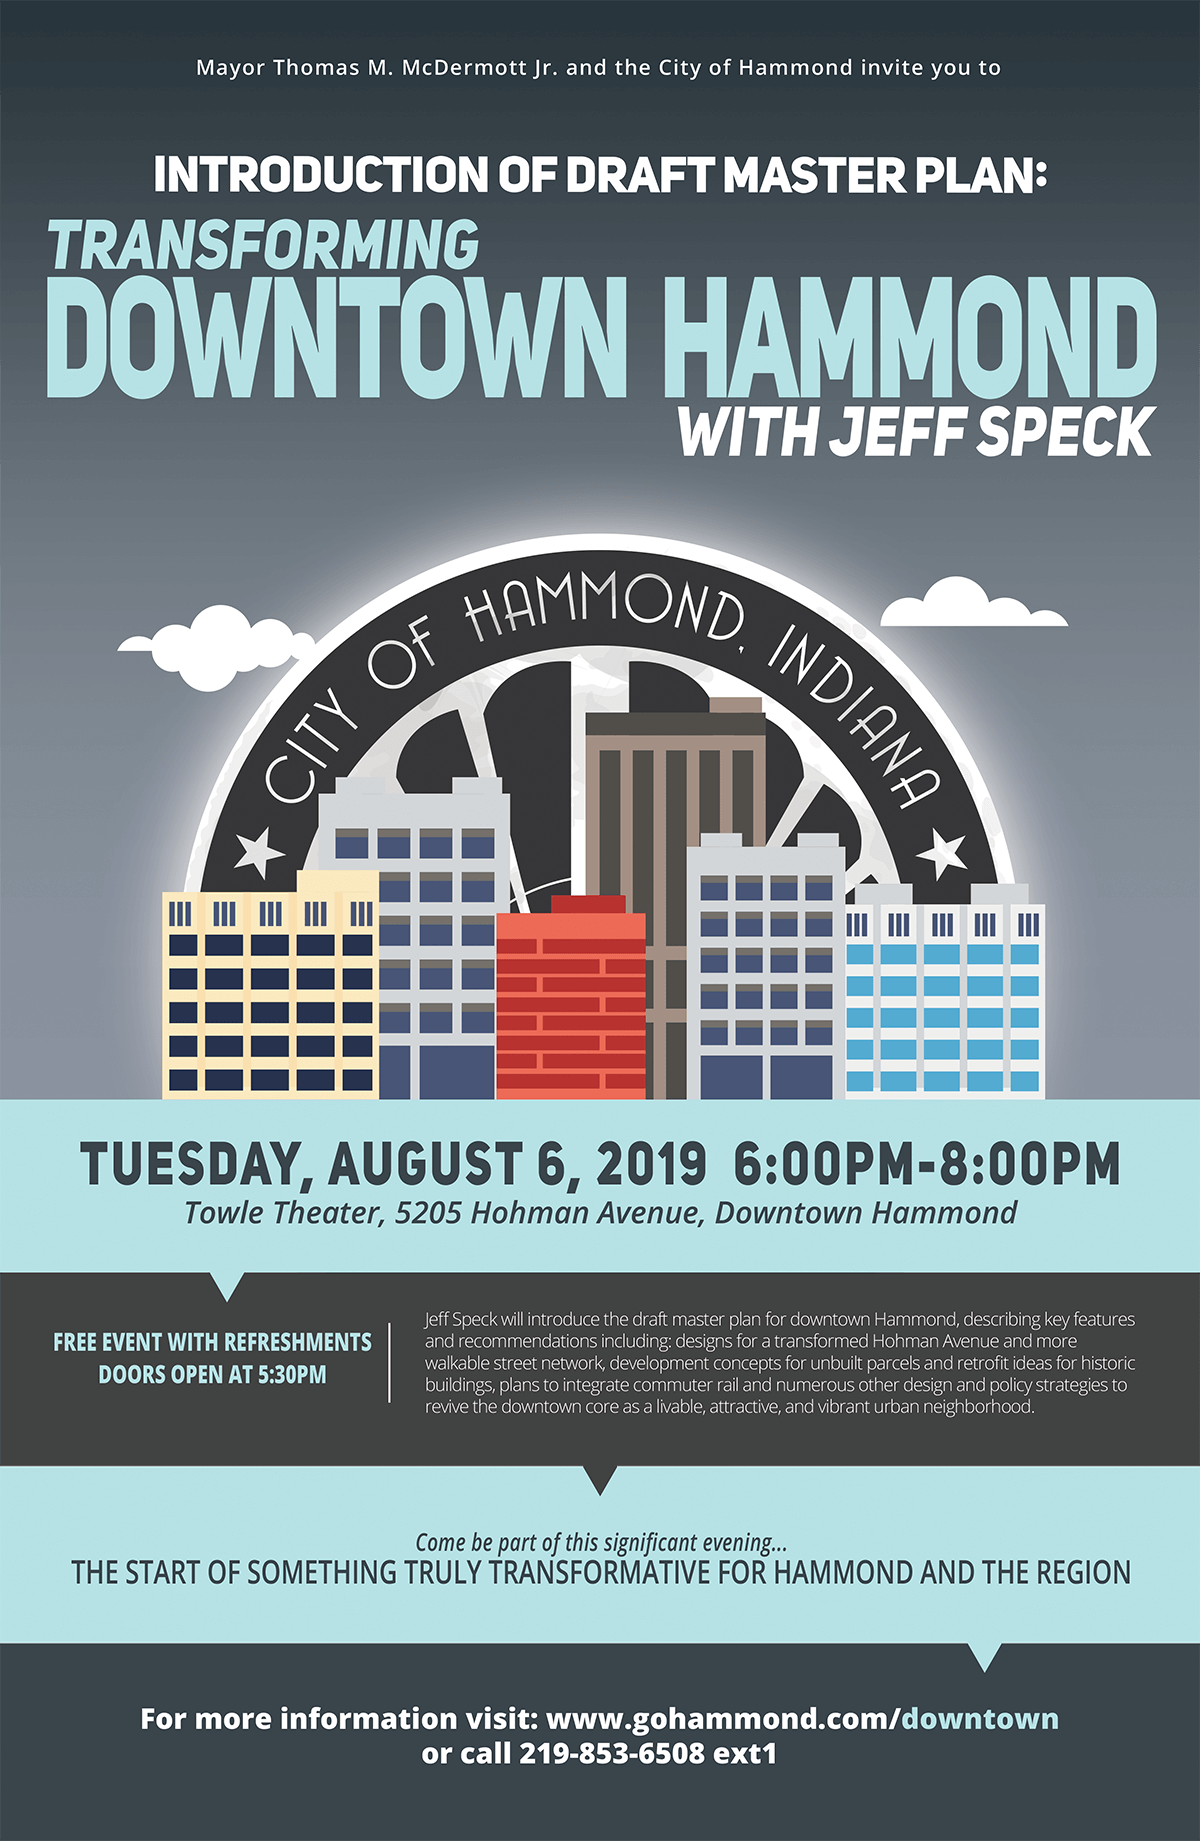 Transforming Downtown Hammond